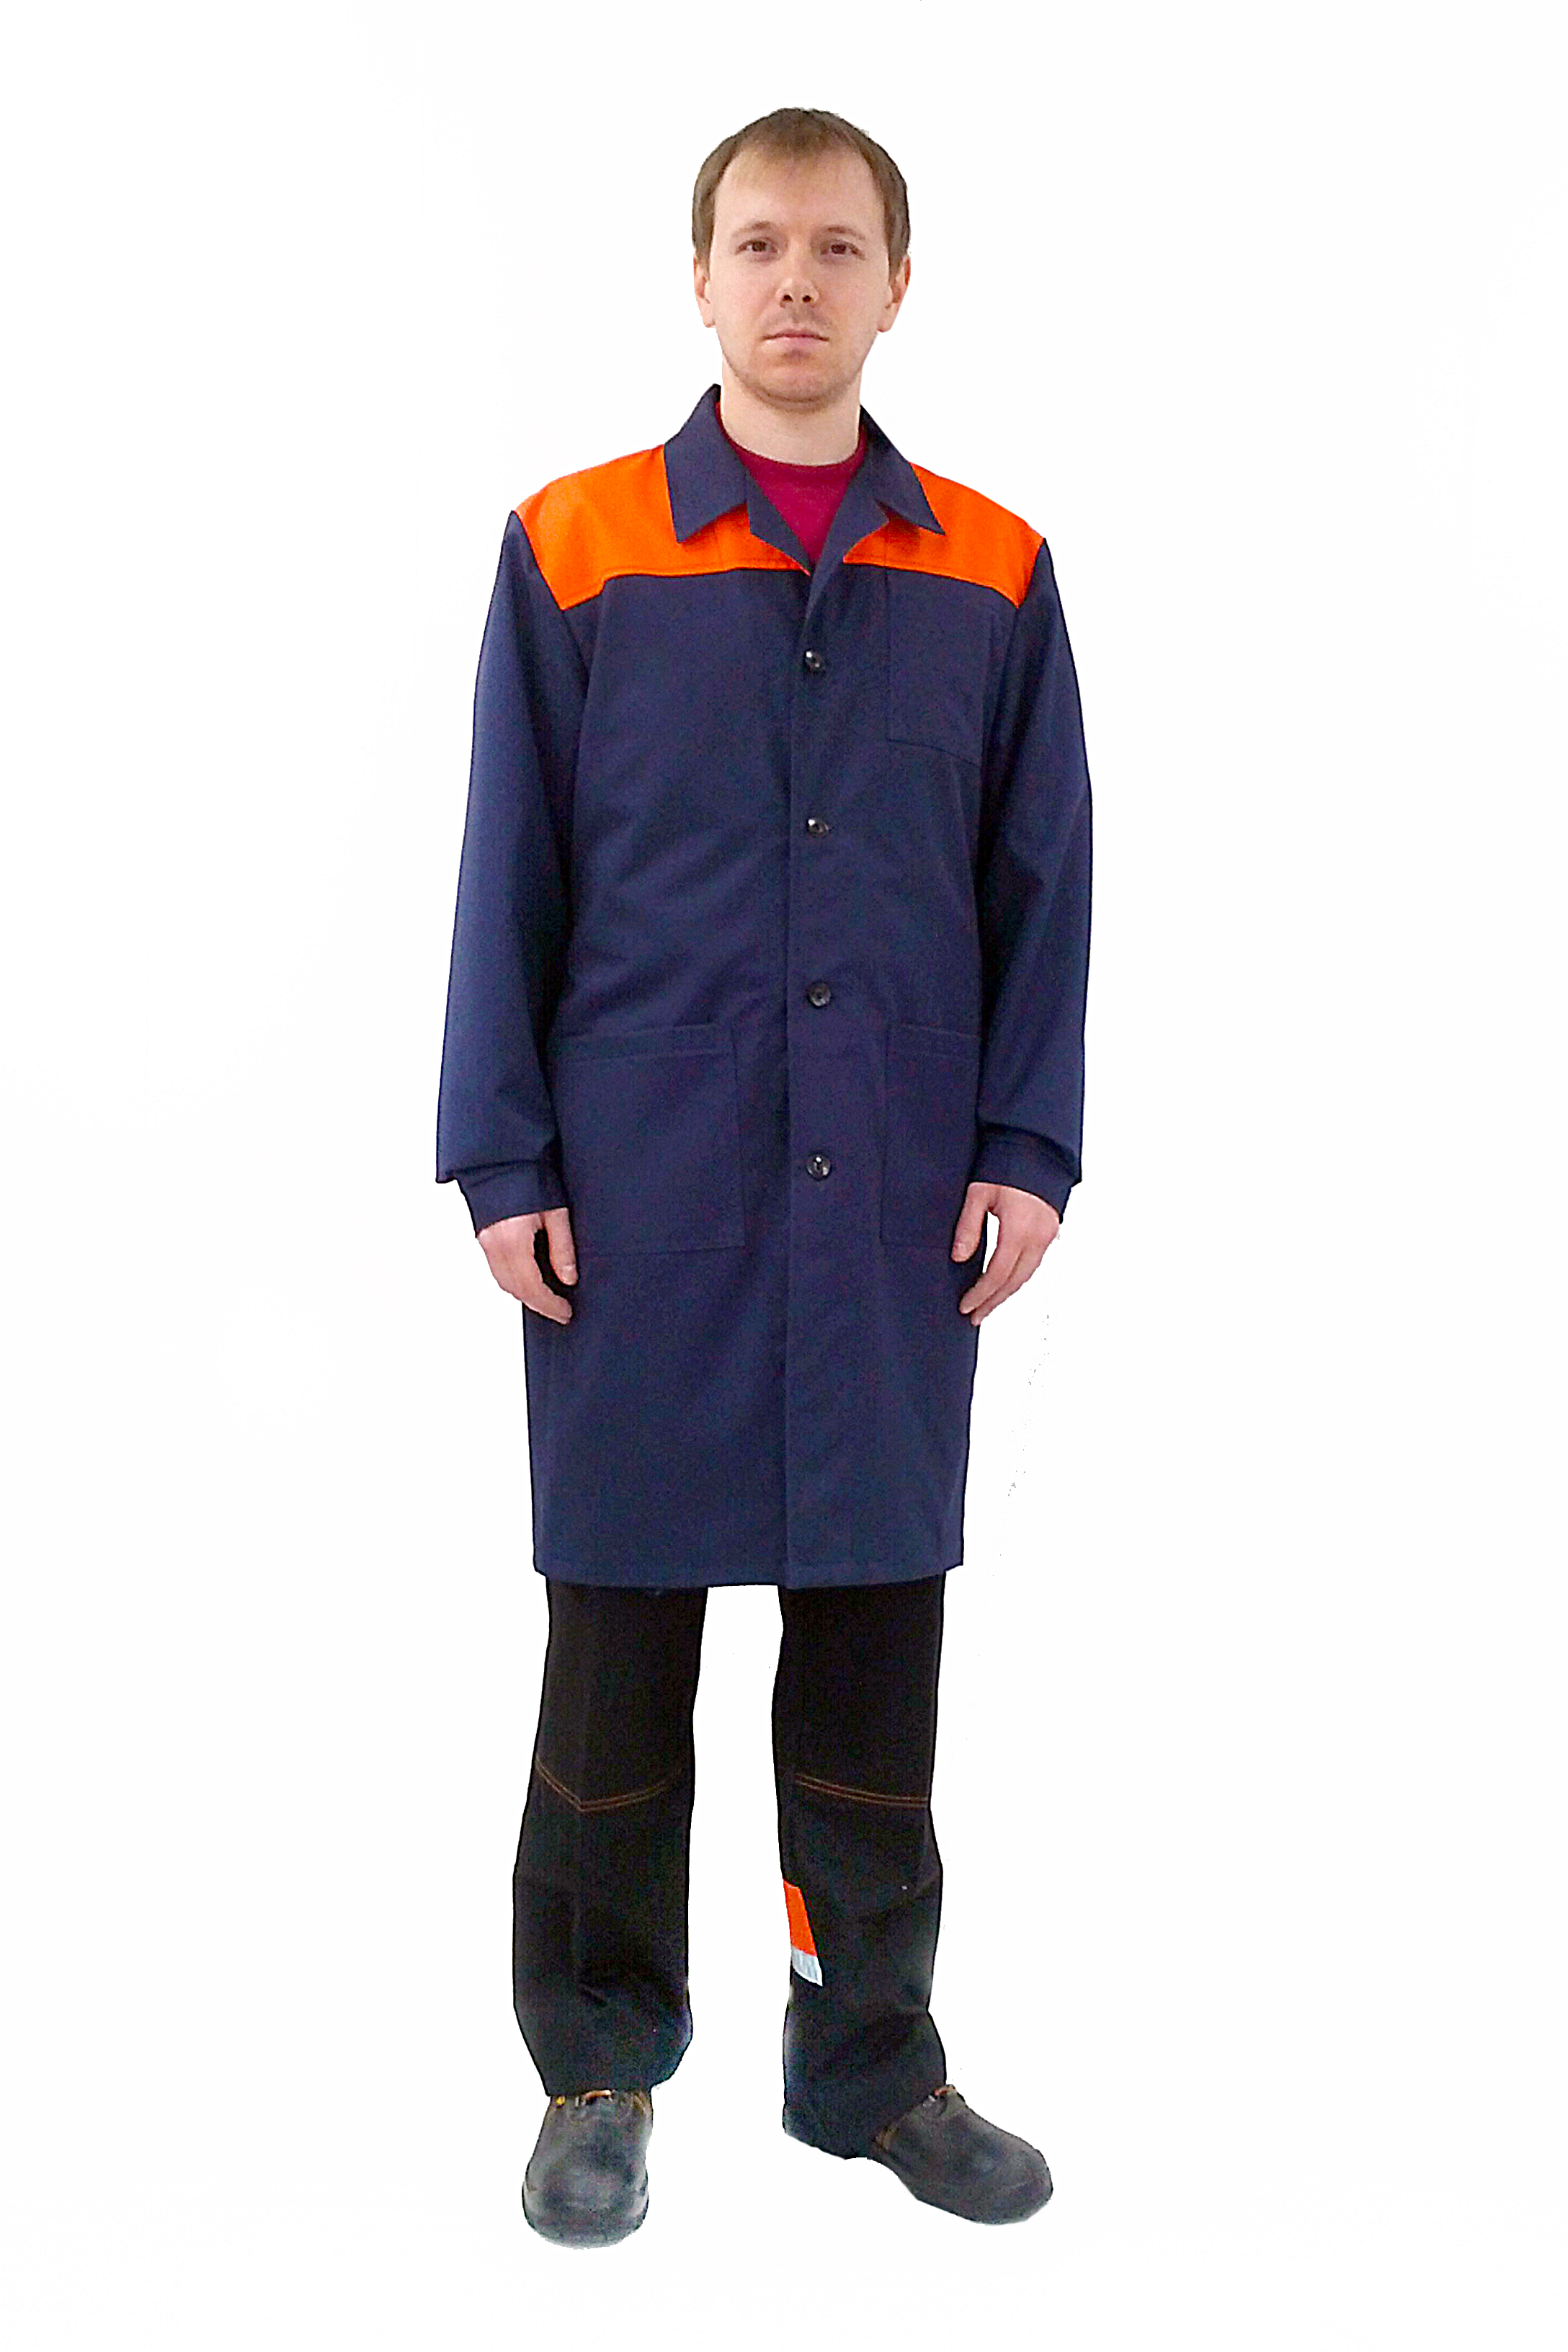  мужской рабочий халат Арт. ХАЛ-01 по низкой стоимости